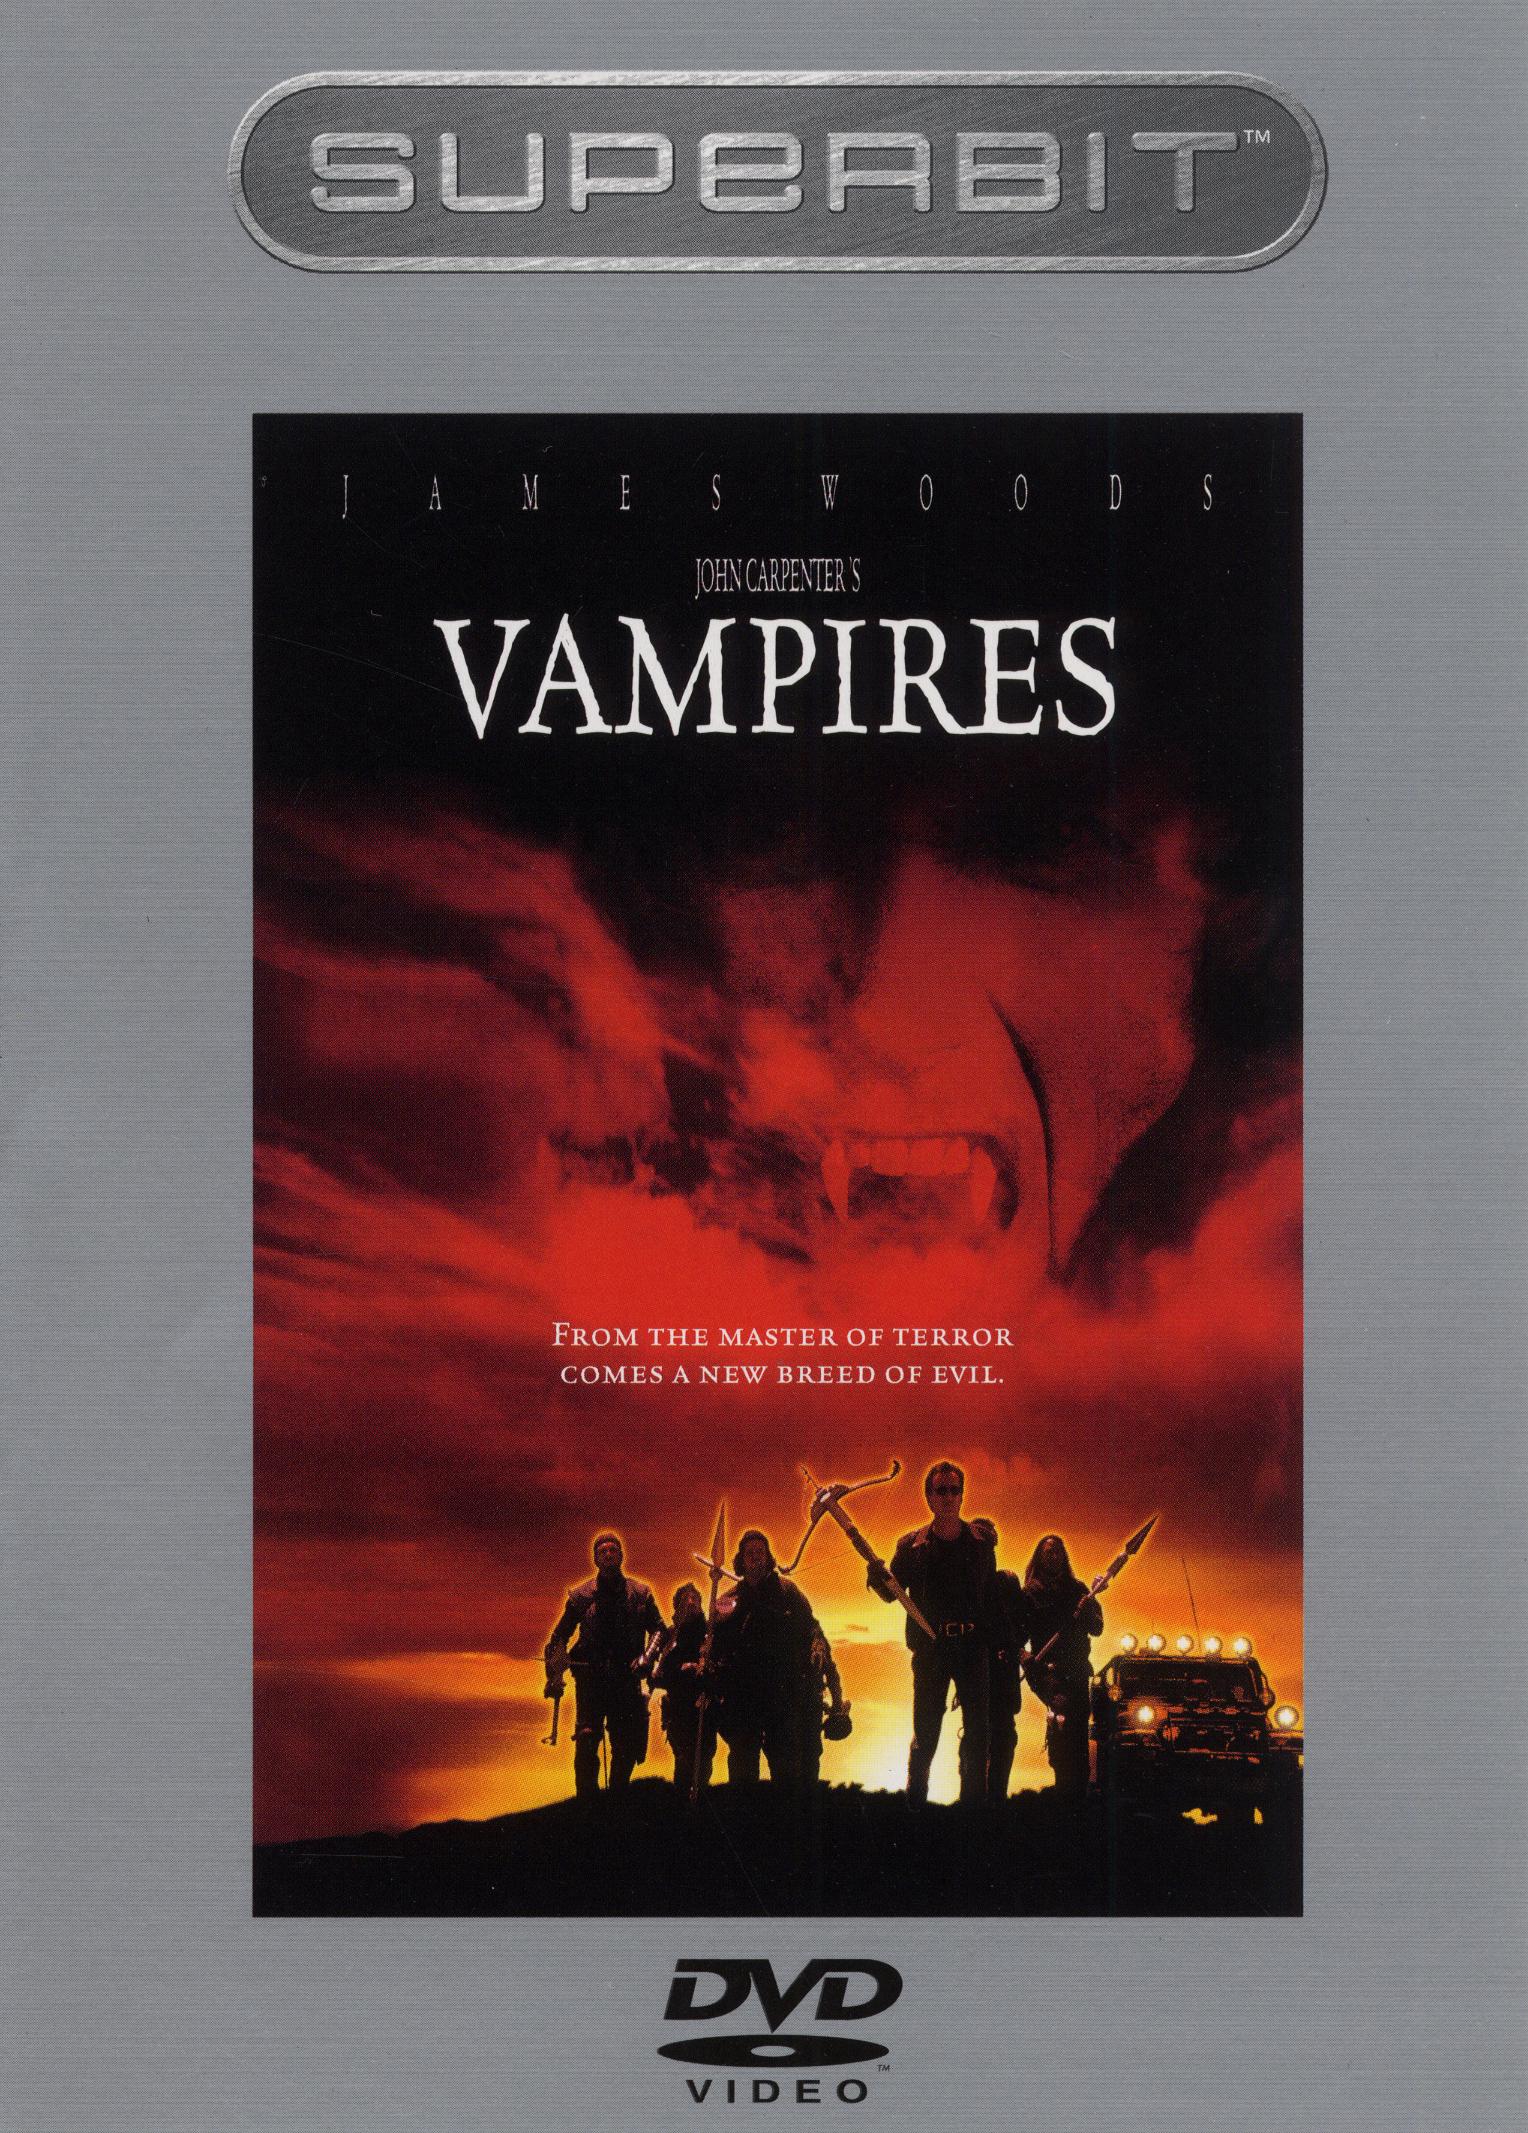 Hero Wooden Vampire Stake Movie Prop from Vampires, (John Carpenter's)  (1998) @ Online Movie Memorabilia Archive and Marketplace 